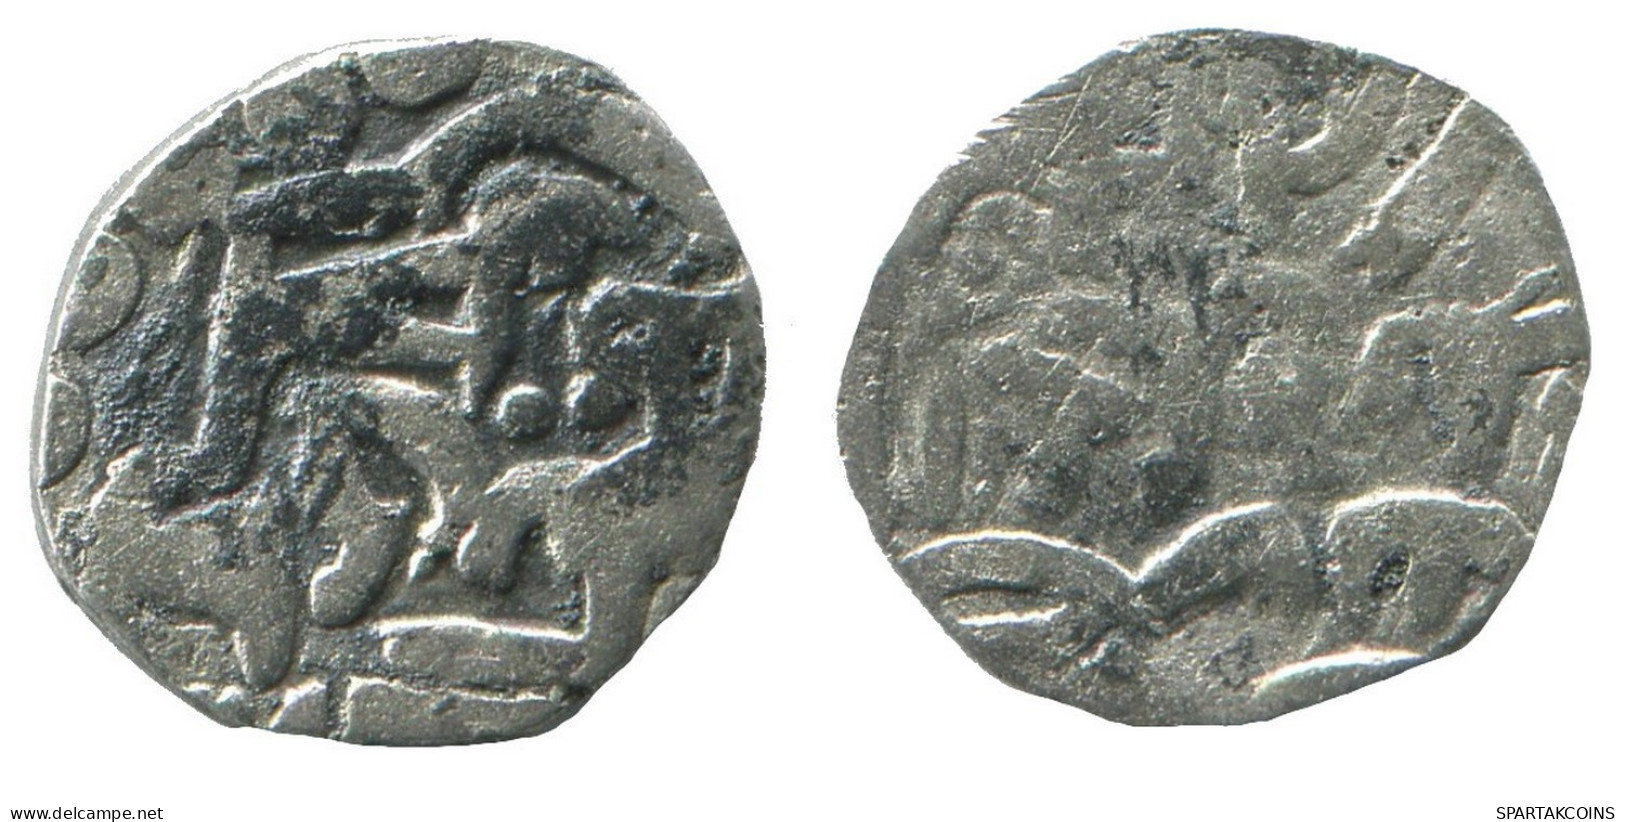 GOLDEN HORDE Silver Dirham Medieval Islamic Coin 0.6g/12mm #NNN2034.8.U.A - Islamische Münzen